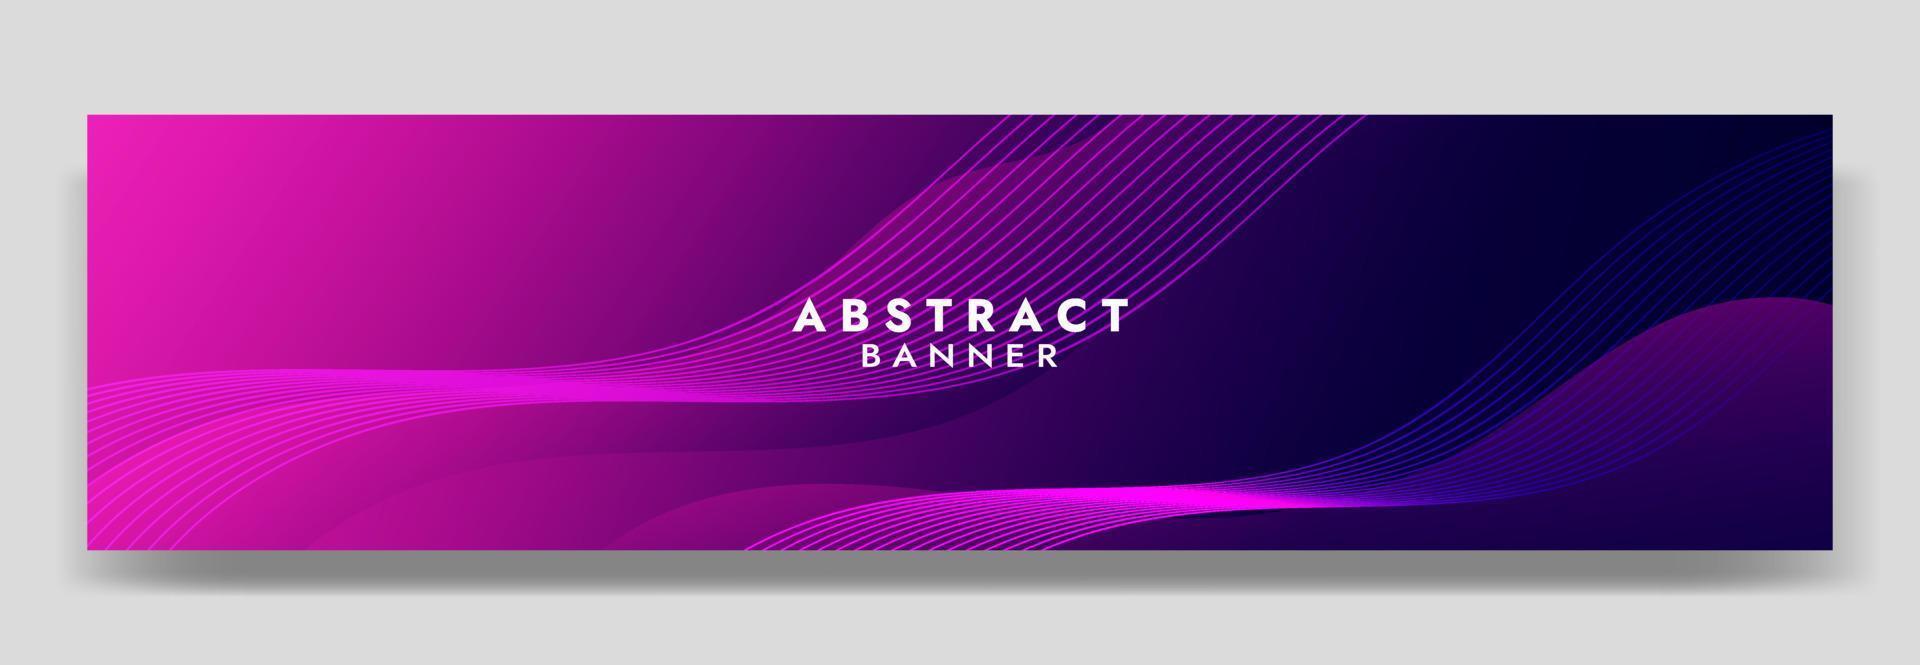 plantilla de banner de onda fluida púrpura abstracta vector